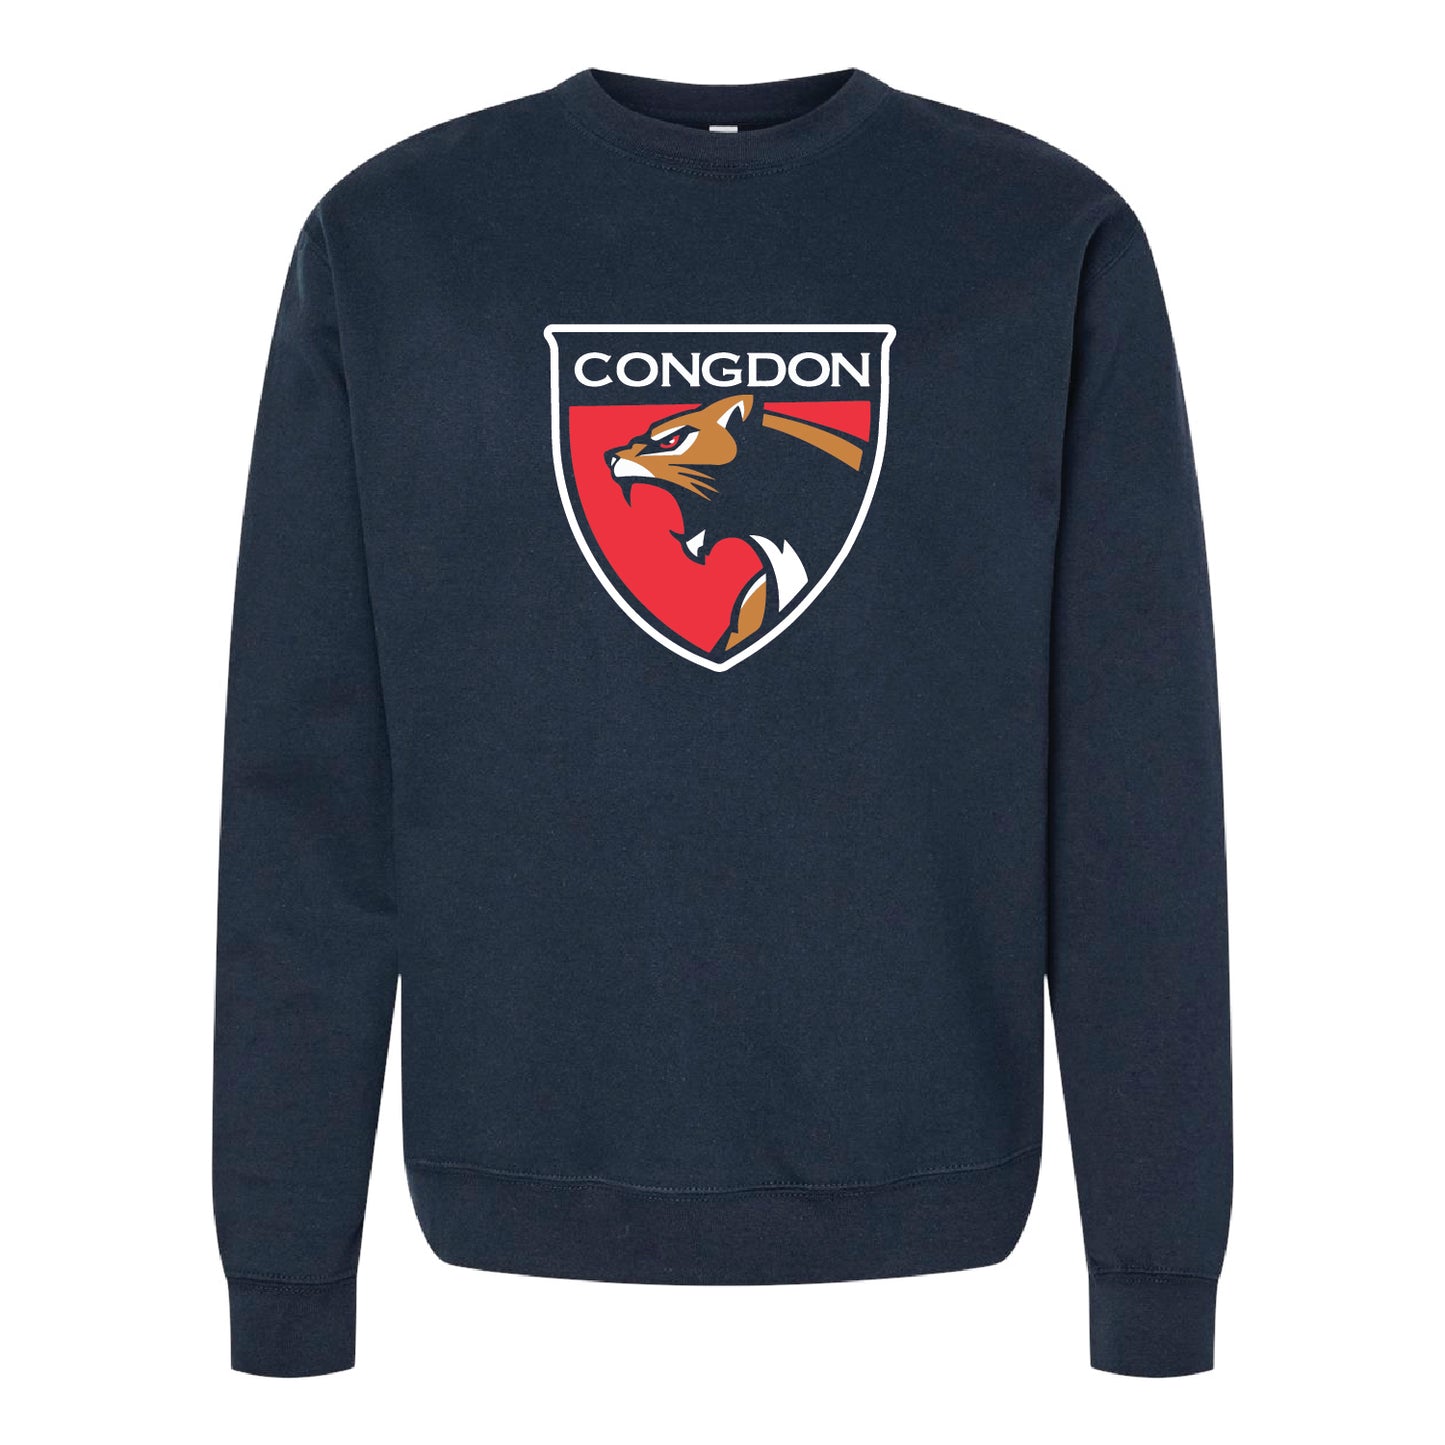 Congdon Unisex Midweight Sweatshirt